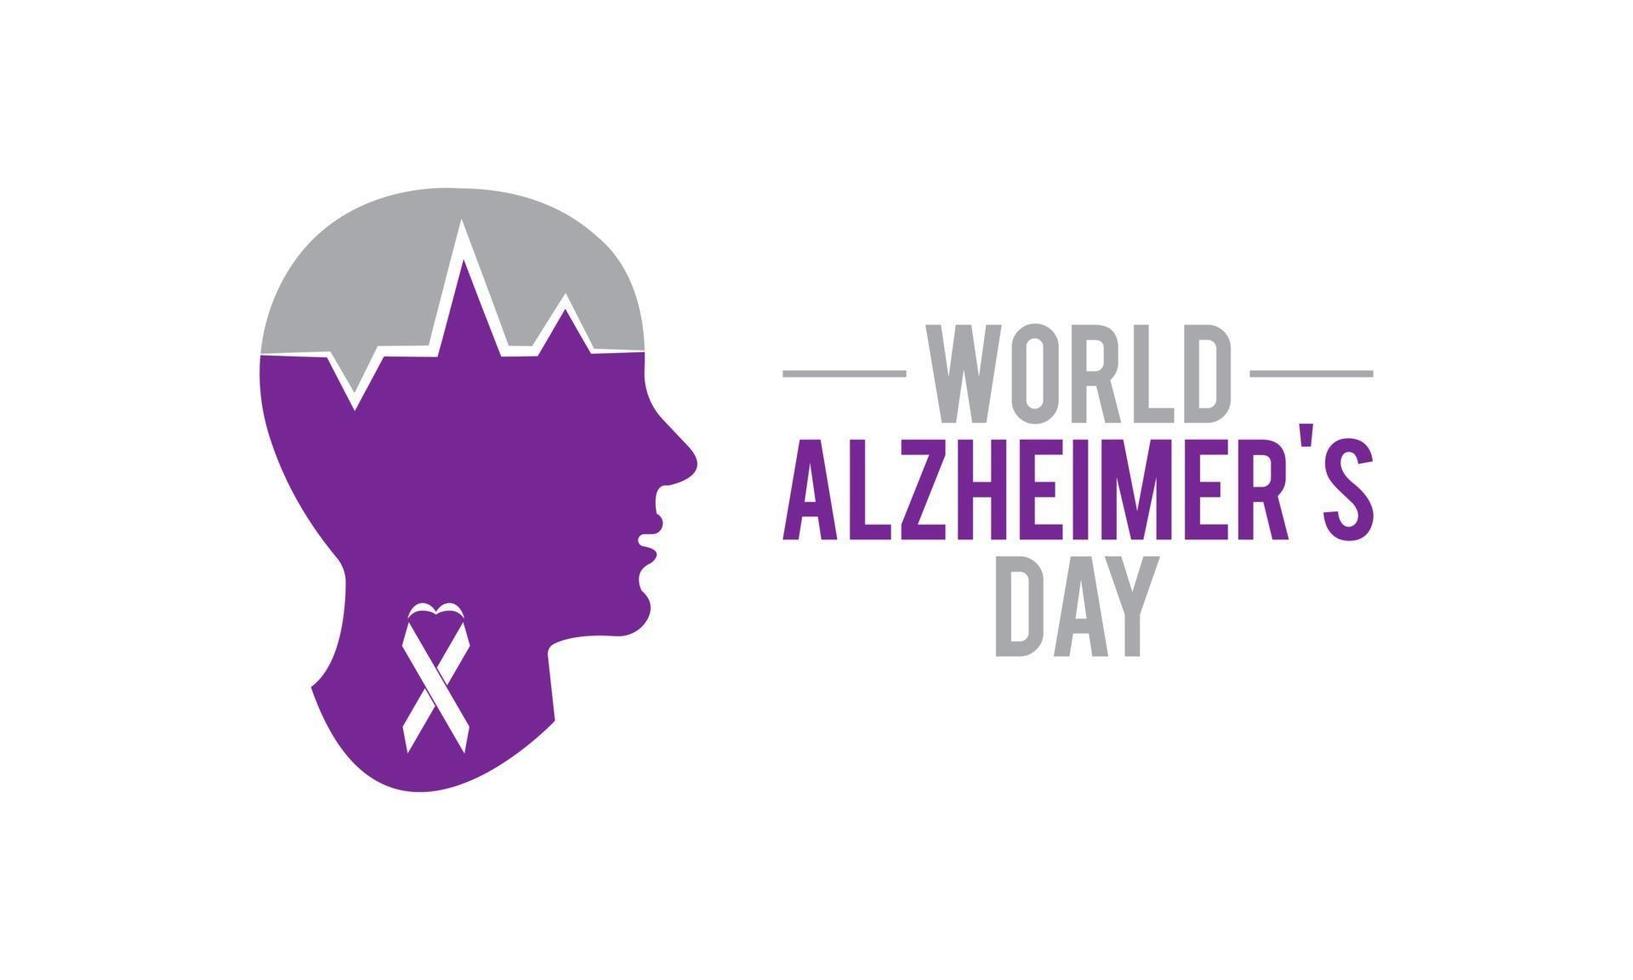 World alzheimer's day banner design vector